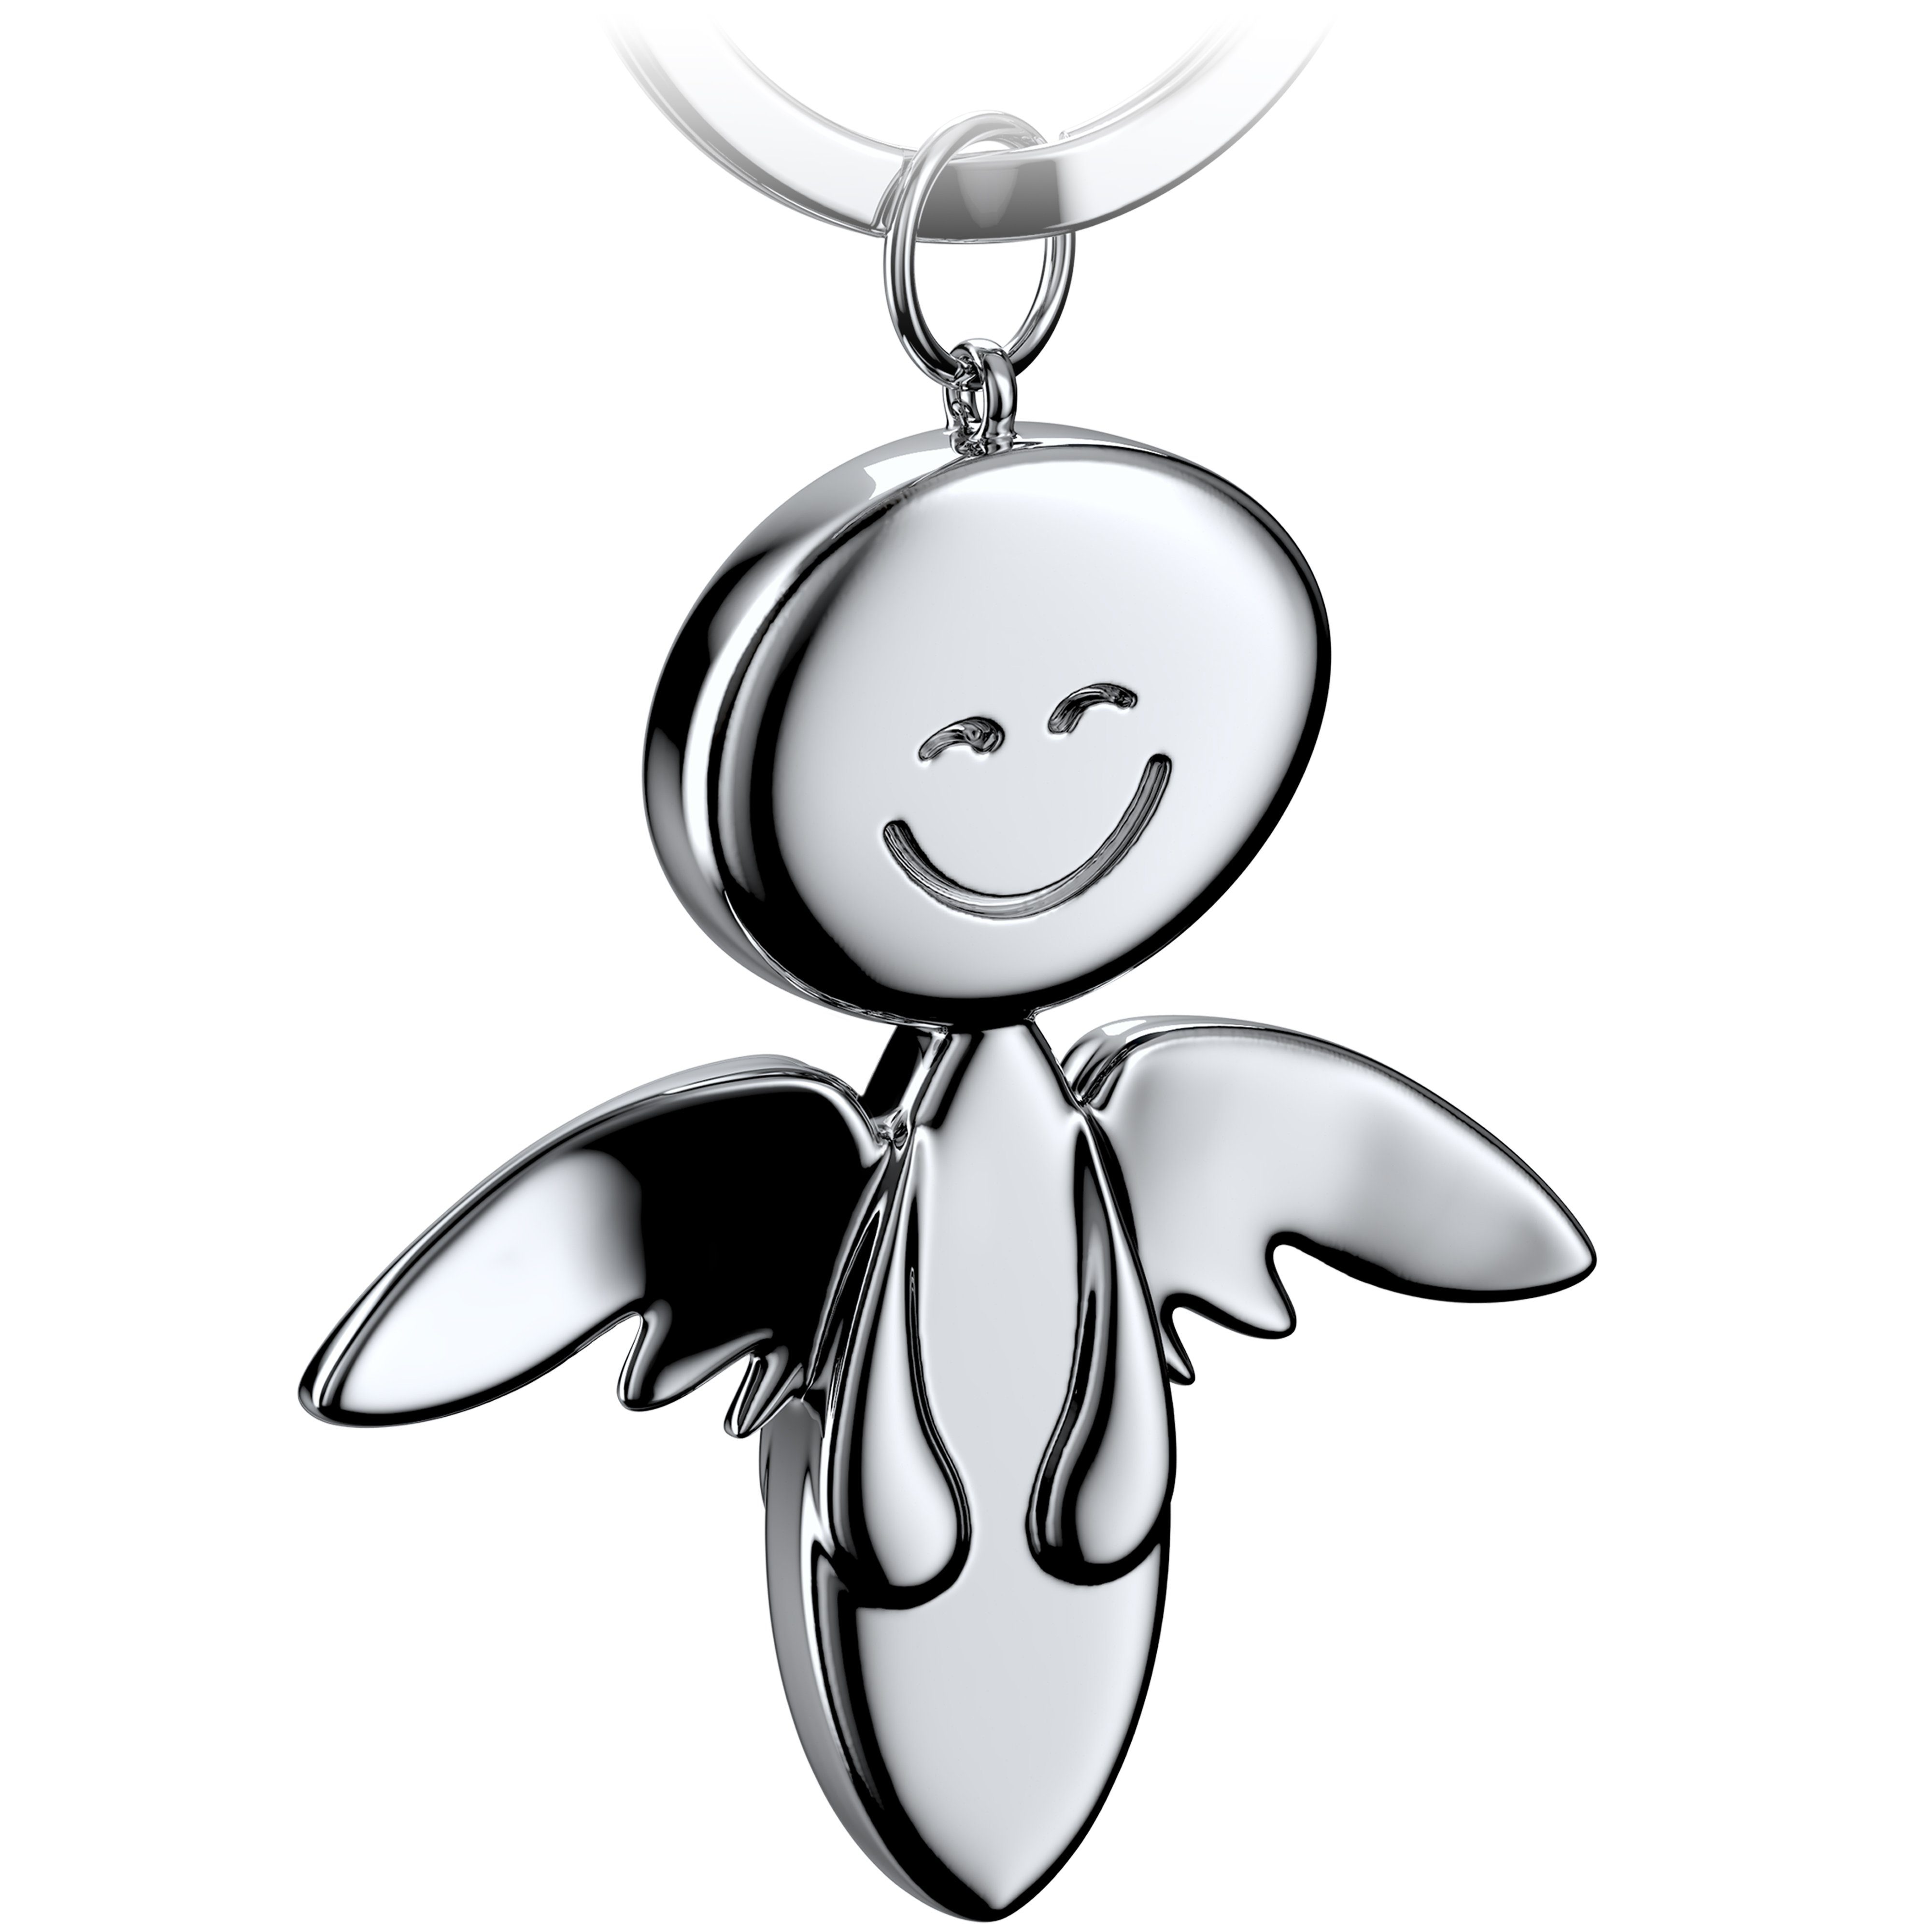 Engel FABACH Silber Geschenk Glücksbringer aus Metall Schutzengel - Schlüsselanhänger Smile - Anhänger